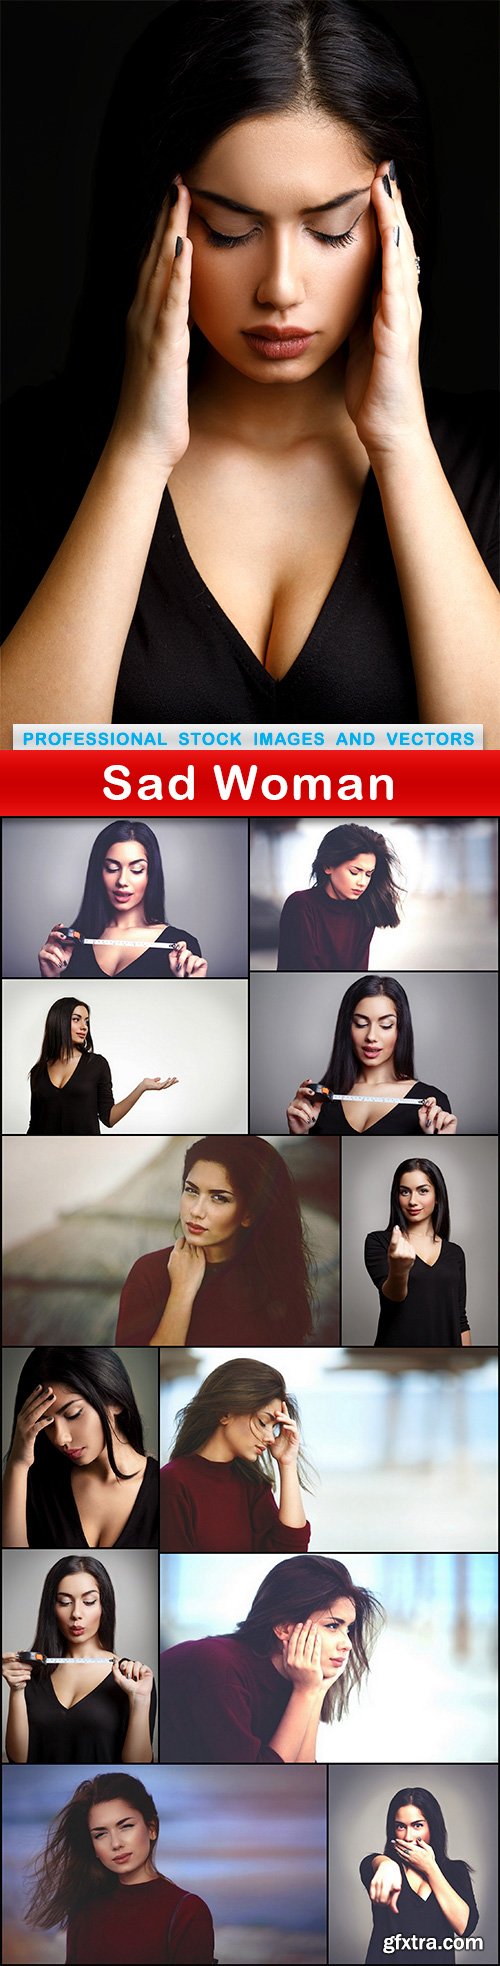 Sad Woman - 13 UHQ JPEG